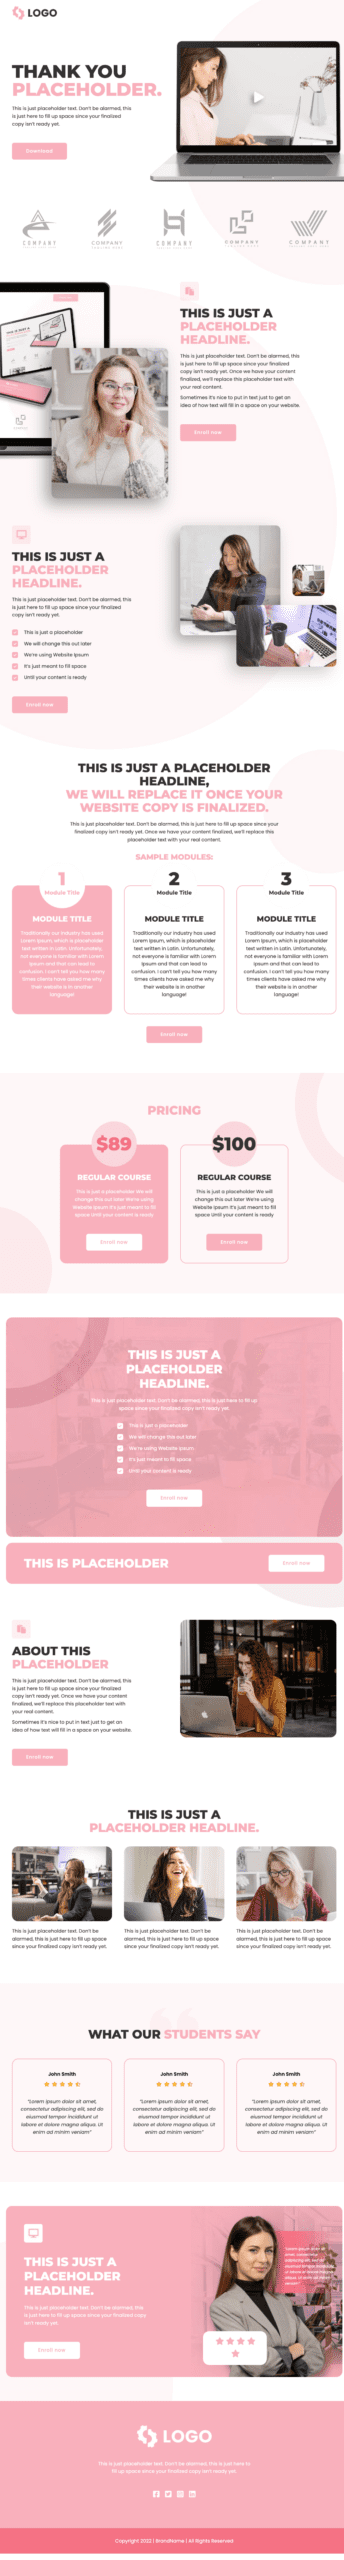 dropfunnels.com_course-pink-white_sales_